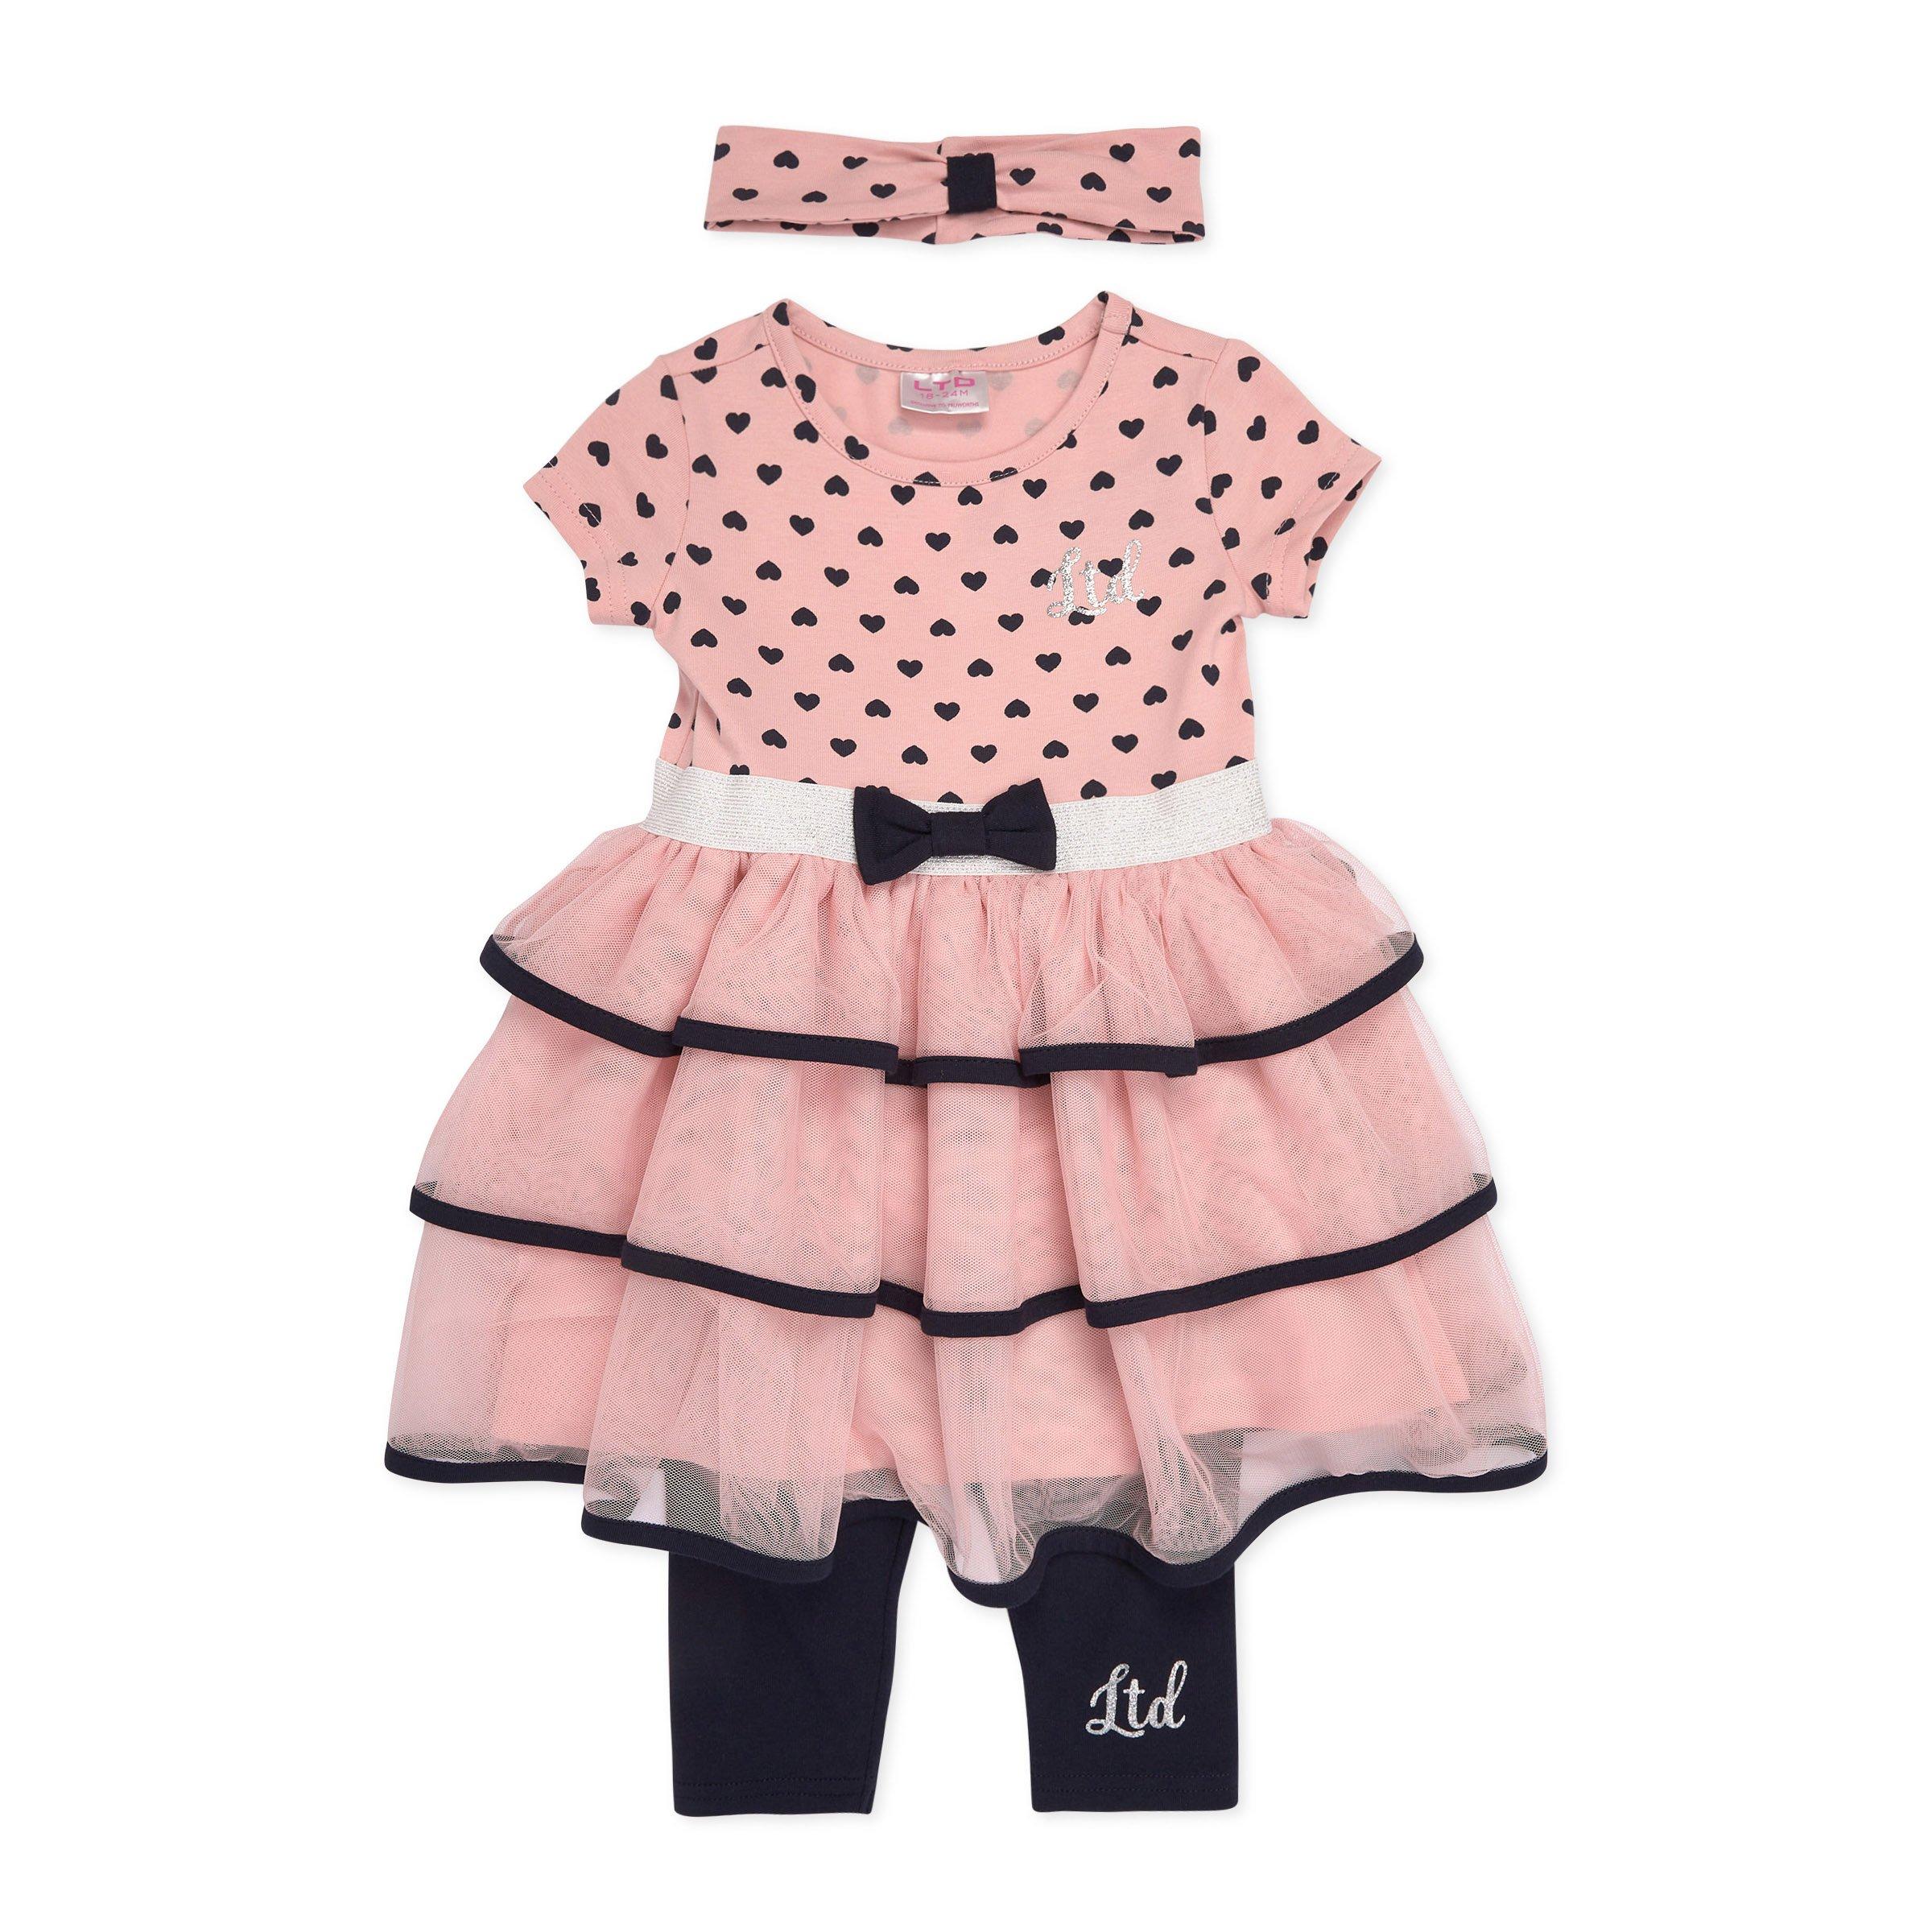 Buy Dress Derek Heart, Stylish kids clothes from KidsMall - 65794